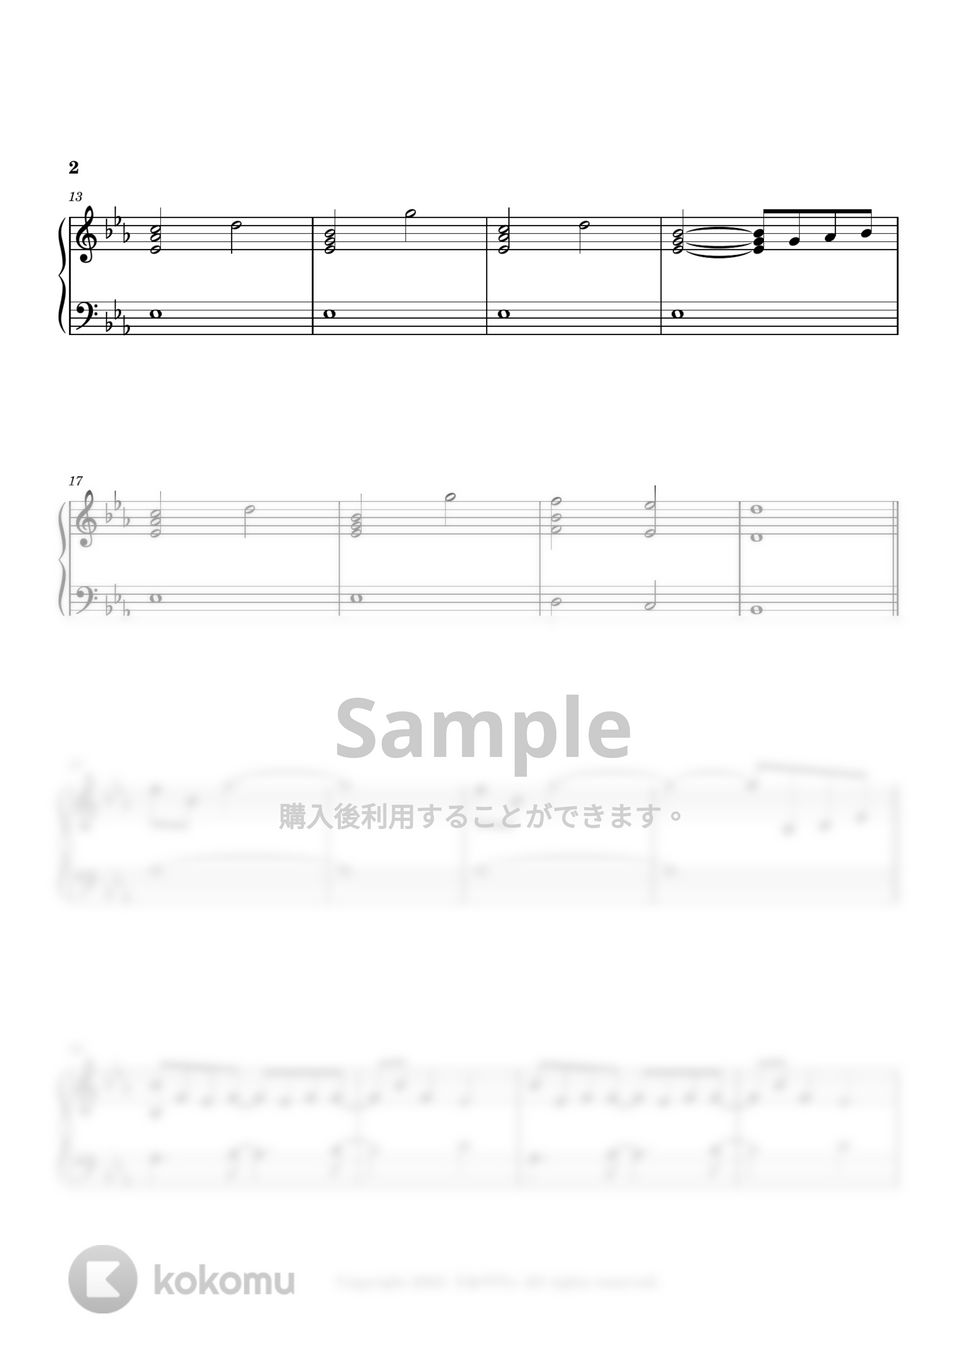 Seiji Kameda - 明日の君を (今夜、世界からこの恋が消えても track 12) by 今日ピアノ(Oneul Piano)